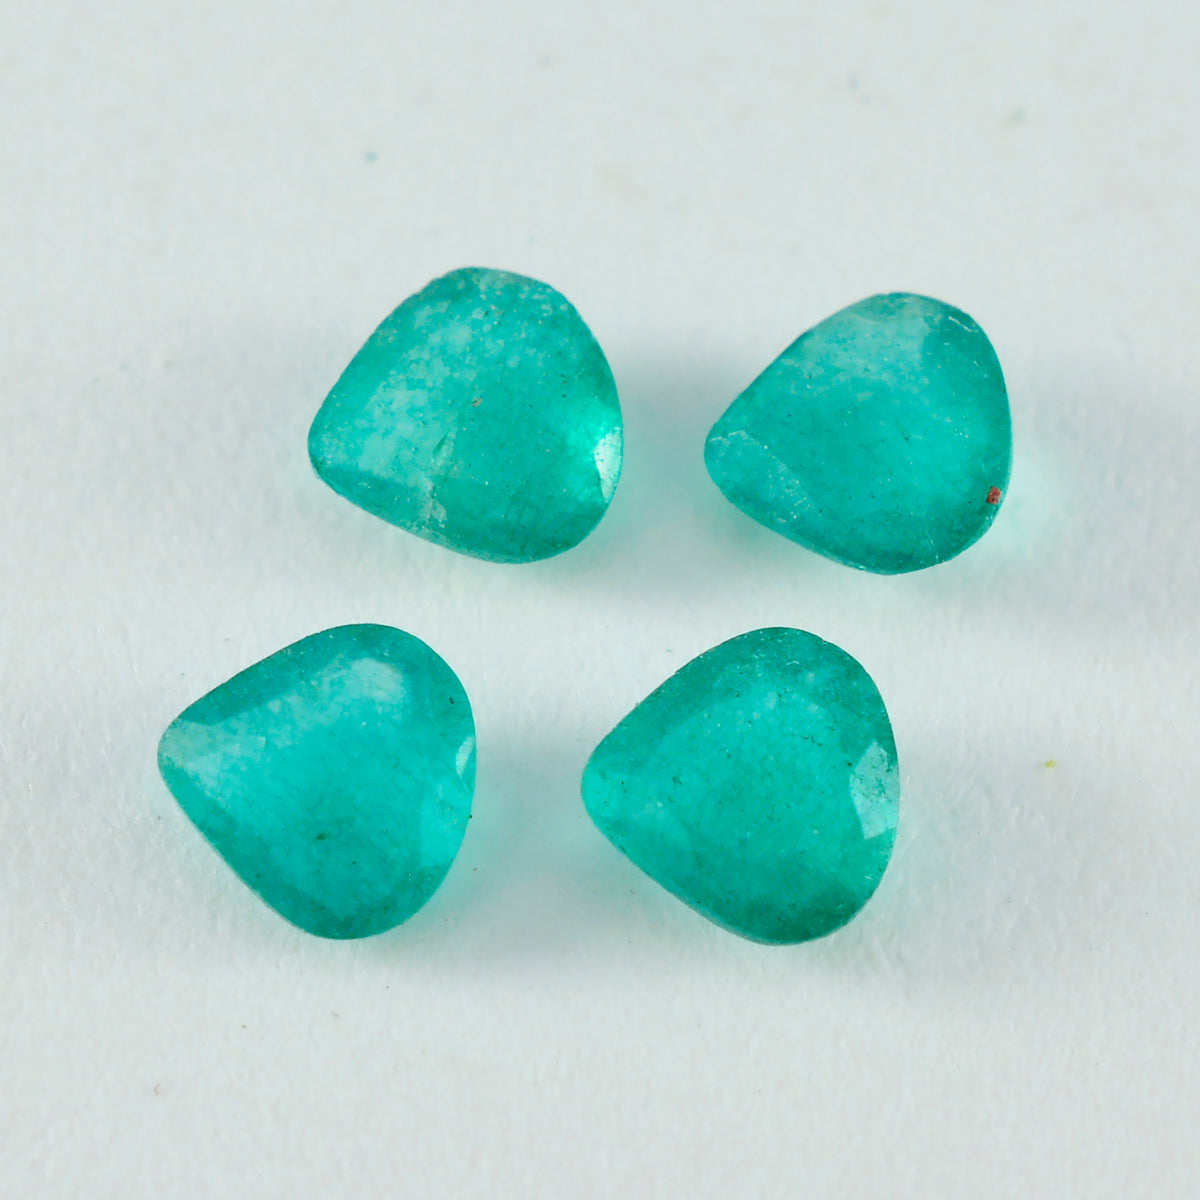 Riyogems 1PC Natural Green Jasper Faceted 9x9 mm Heart Shape AA Quality Loose Stone